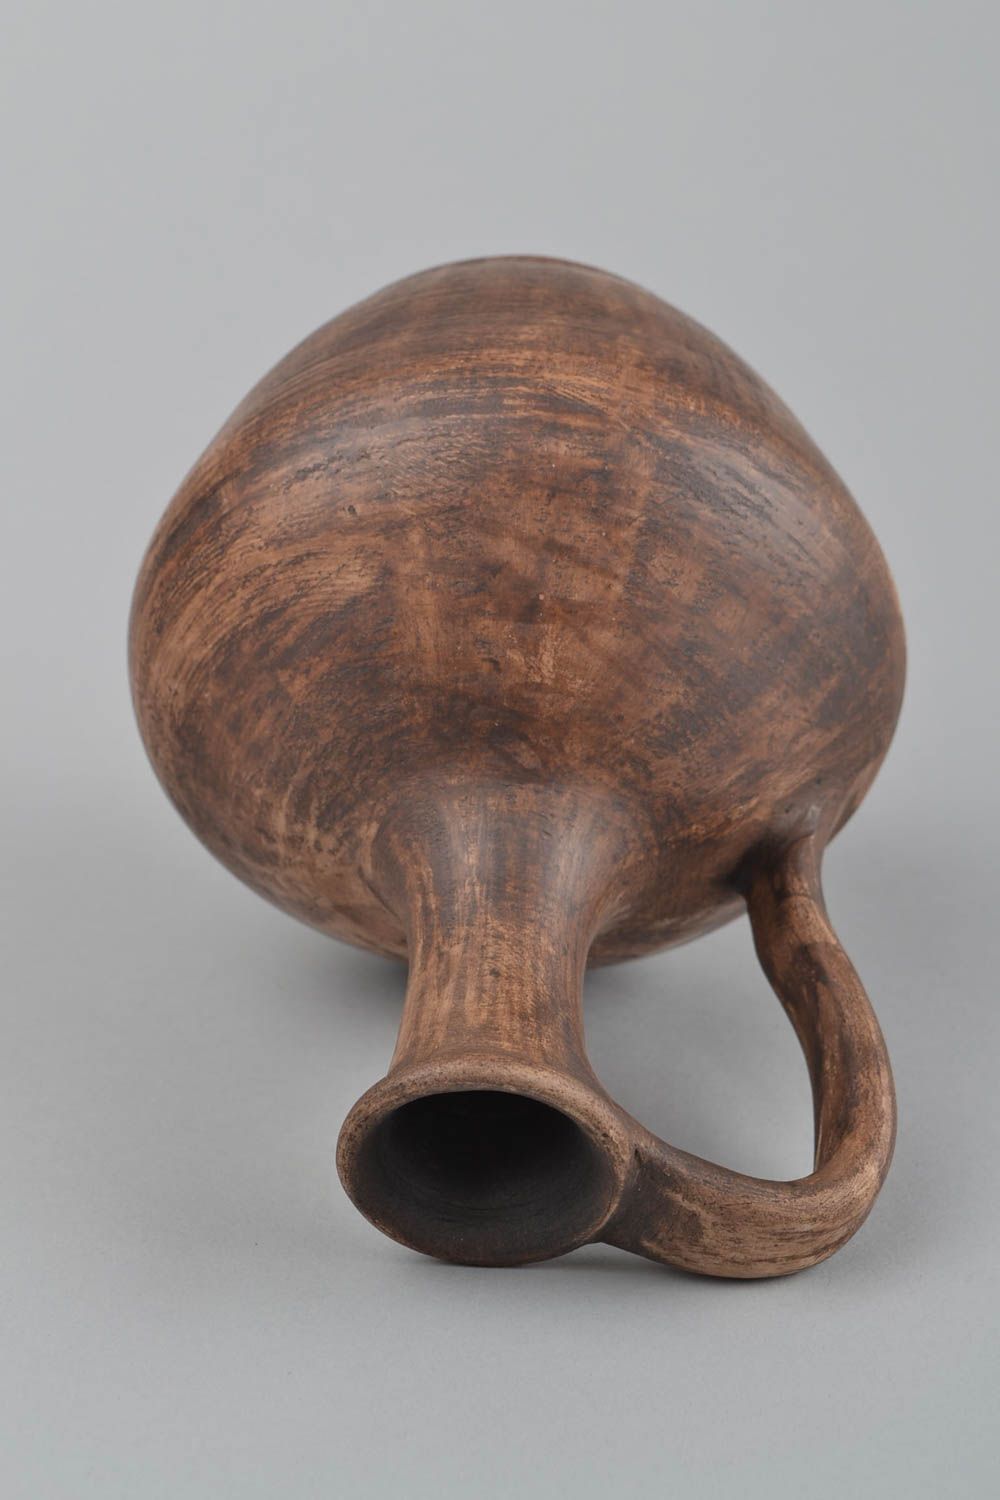 30 oz handmade ceramic wine pitcher carafe with handle 1,2 lb photo 4